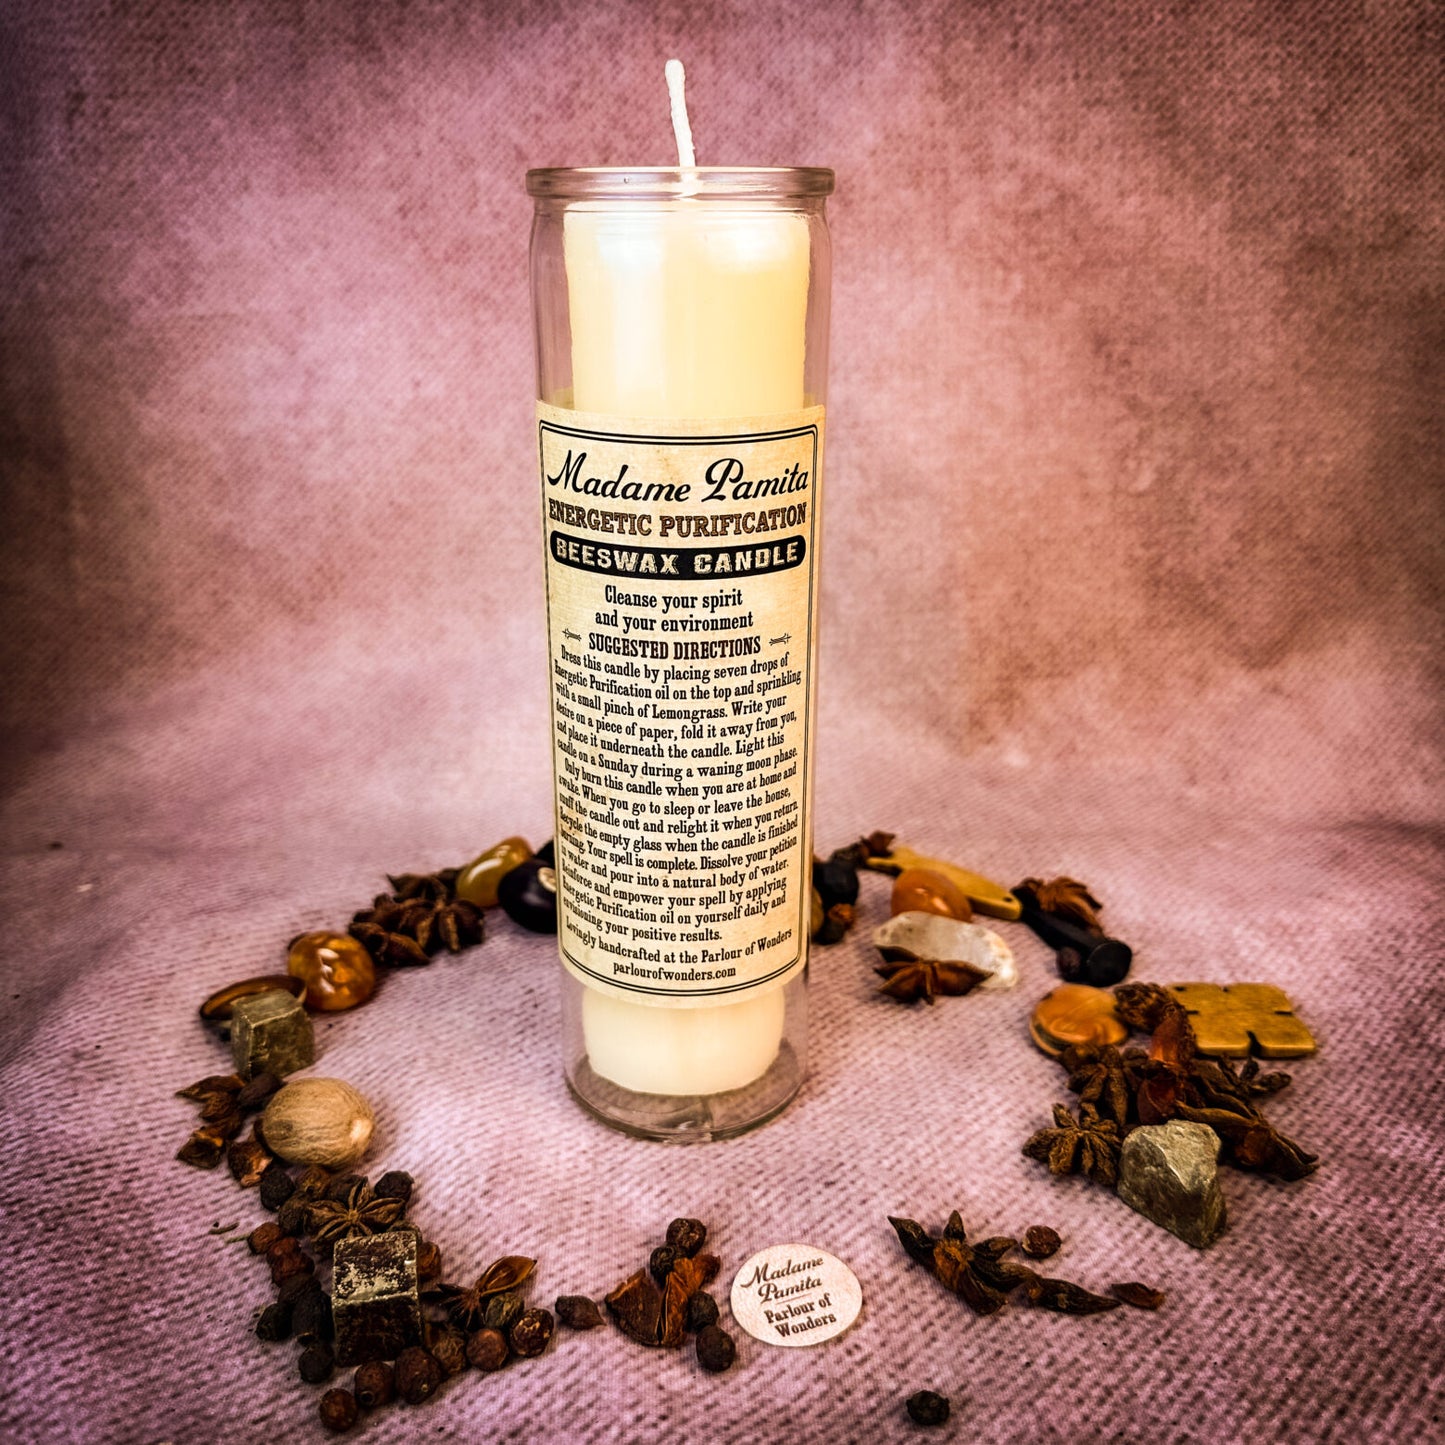 Madame Pamita Energetic Purification Beeswax Vigil Candle